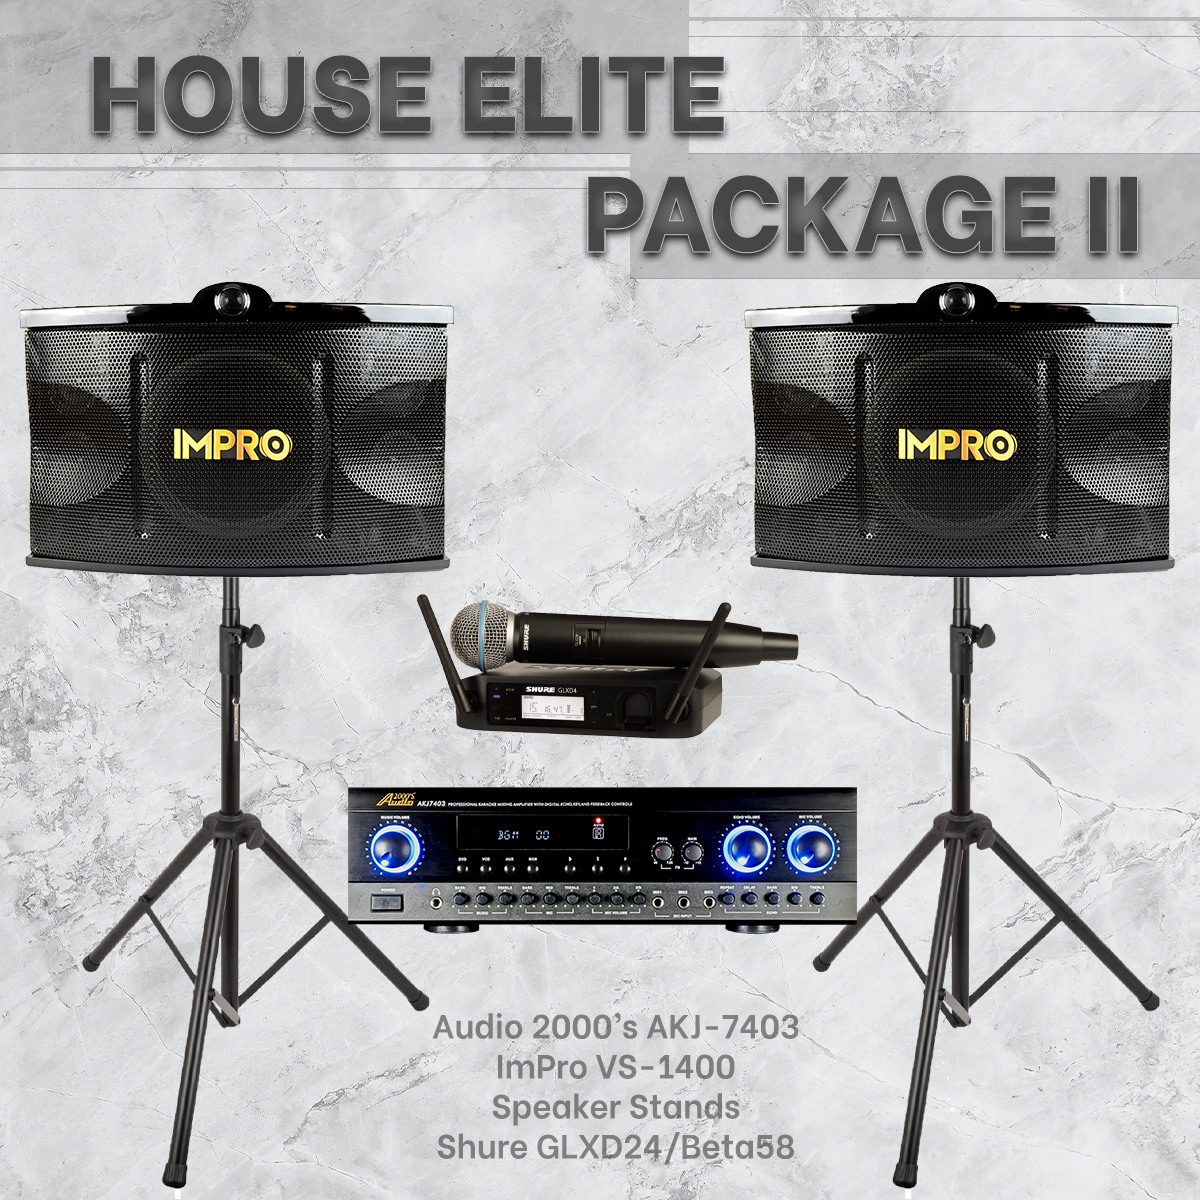 Gói House Elite #02: AKJ-7403 của Audio2000 + ImPro VS-1400 + HD-888A + Chân đế + Hệ thống micro Shure GLXD